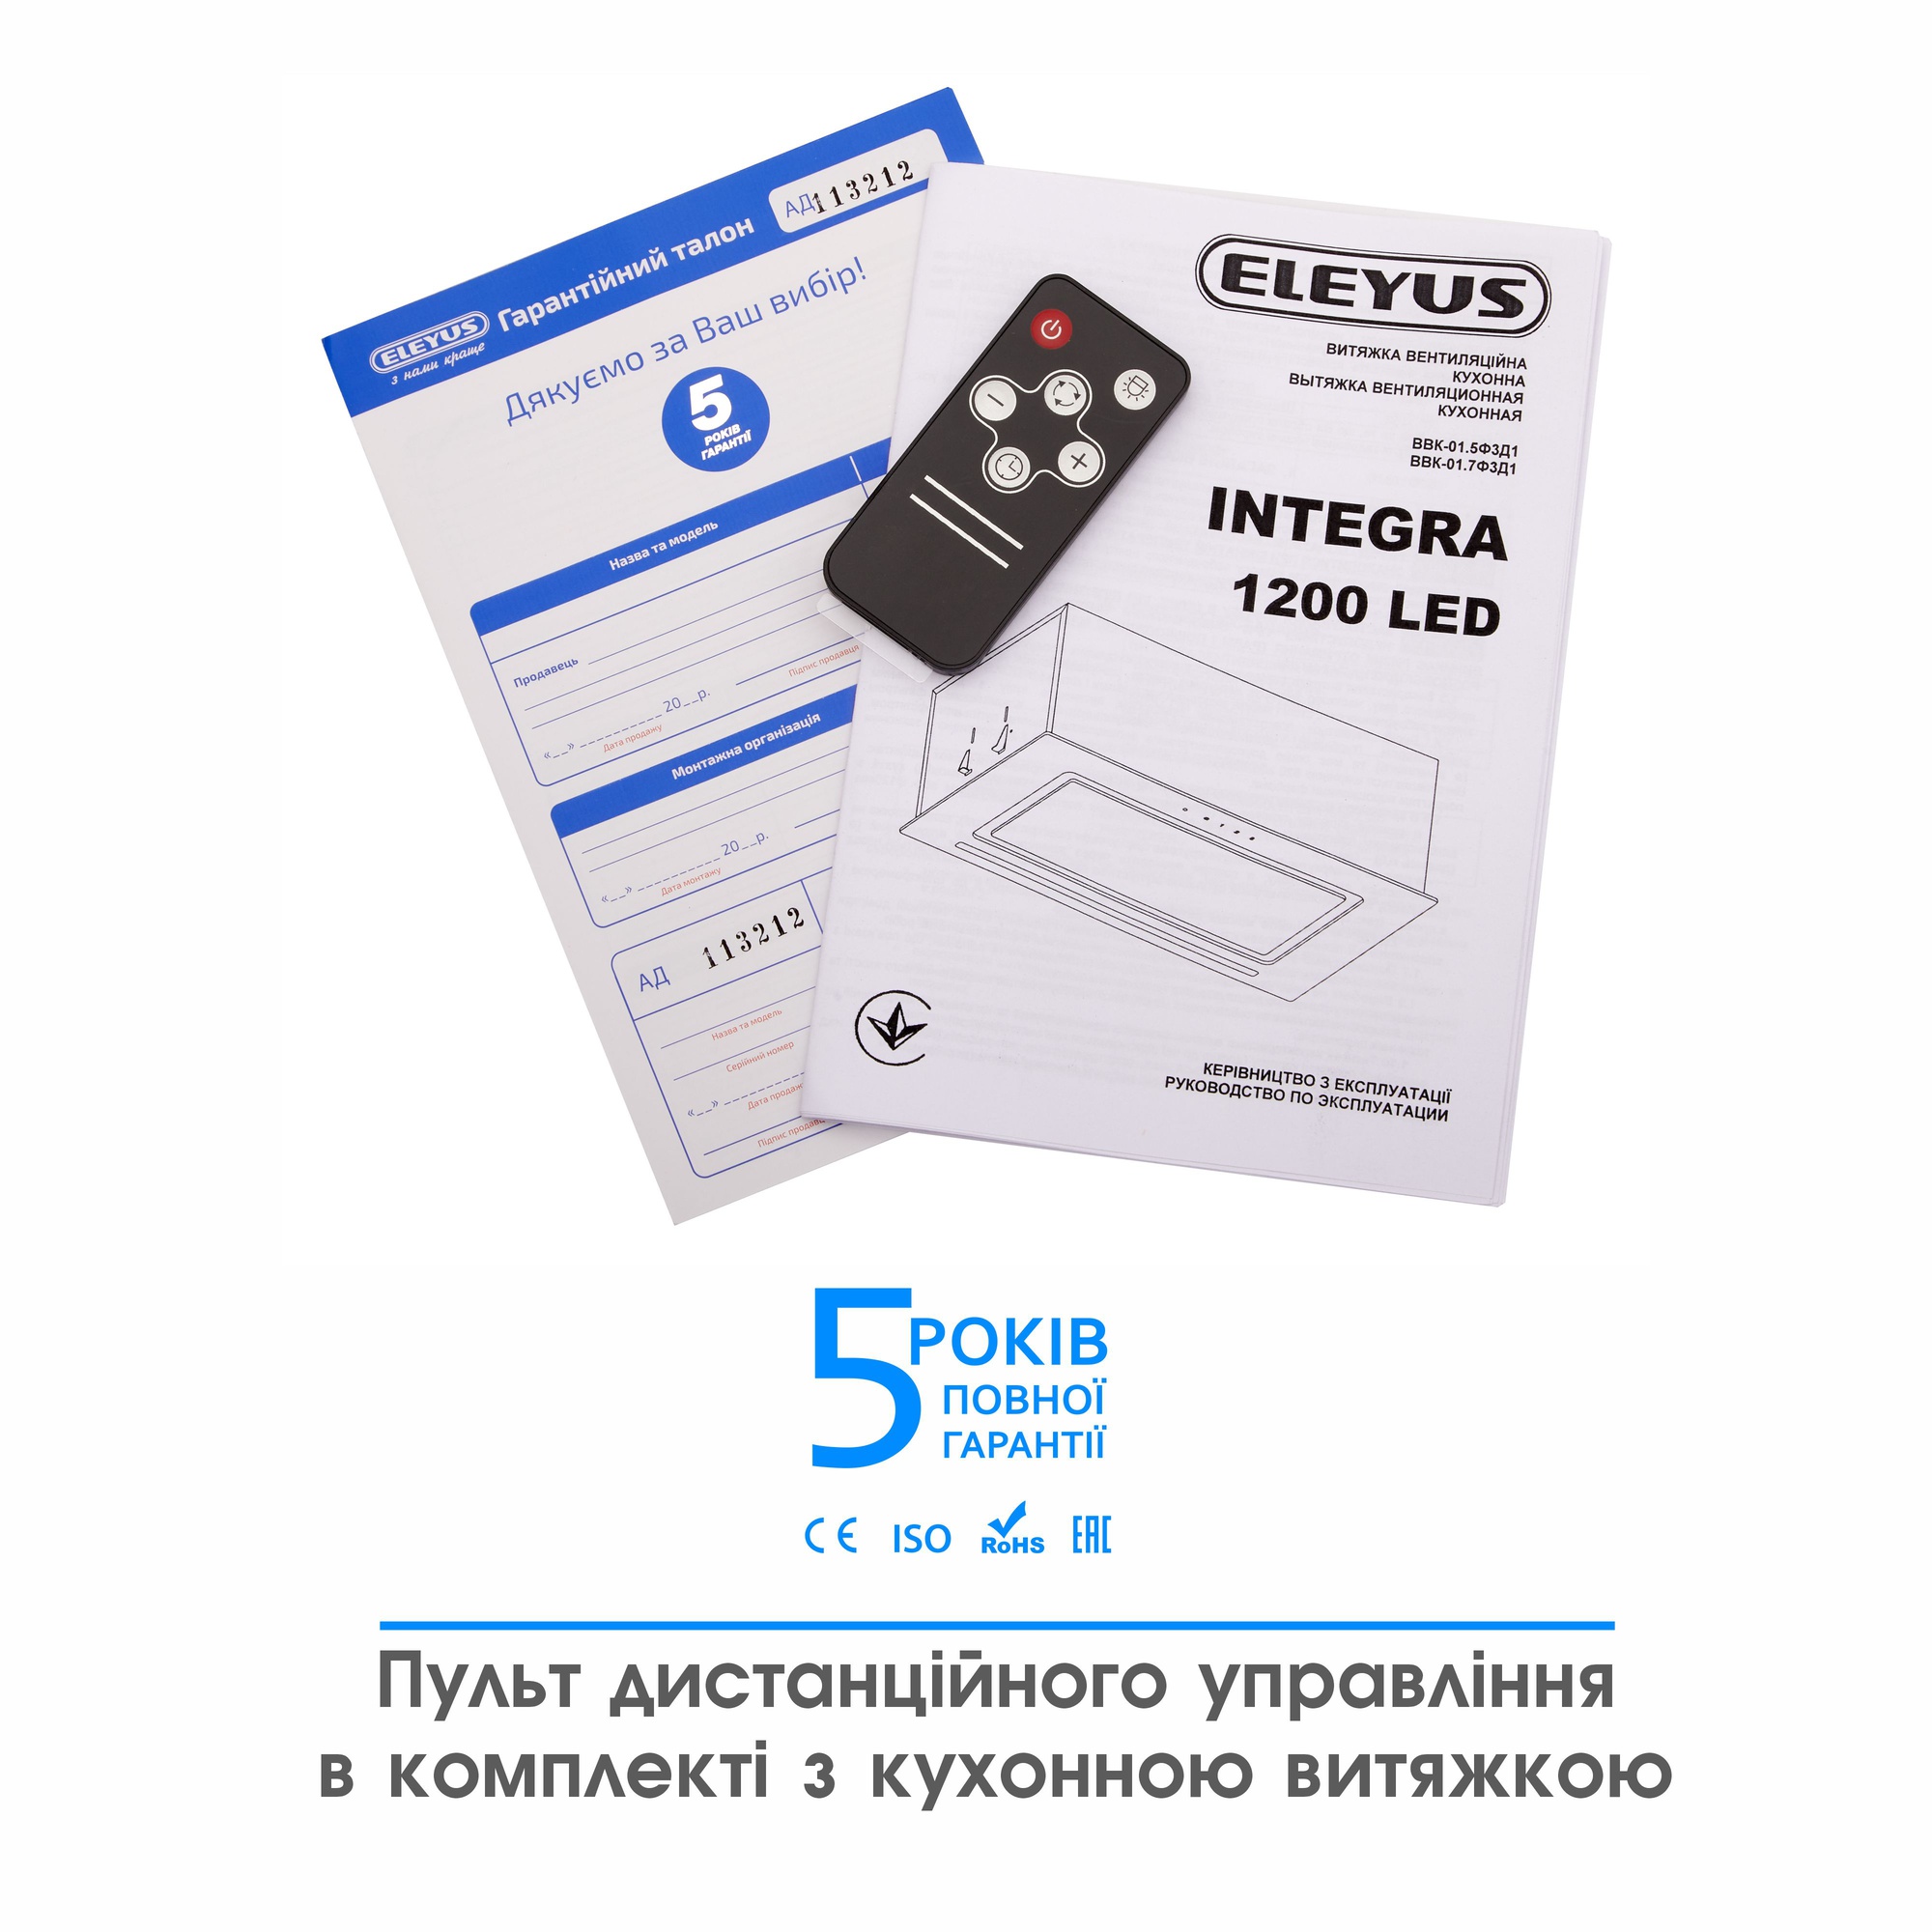 картка товару Eleyus Integra 1200 LED 70 WH - фото 16